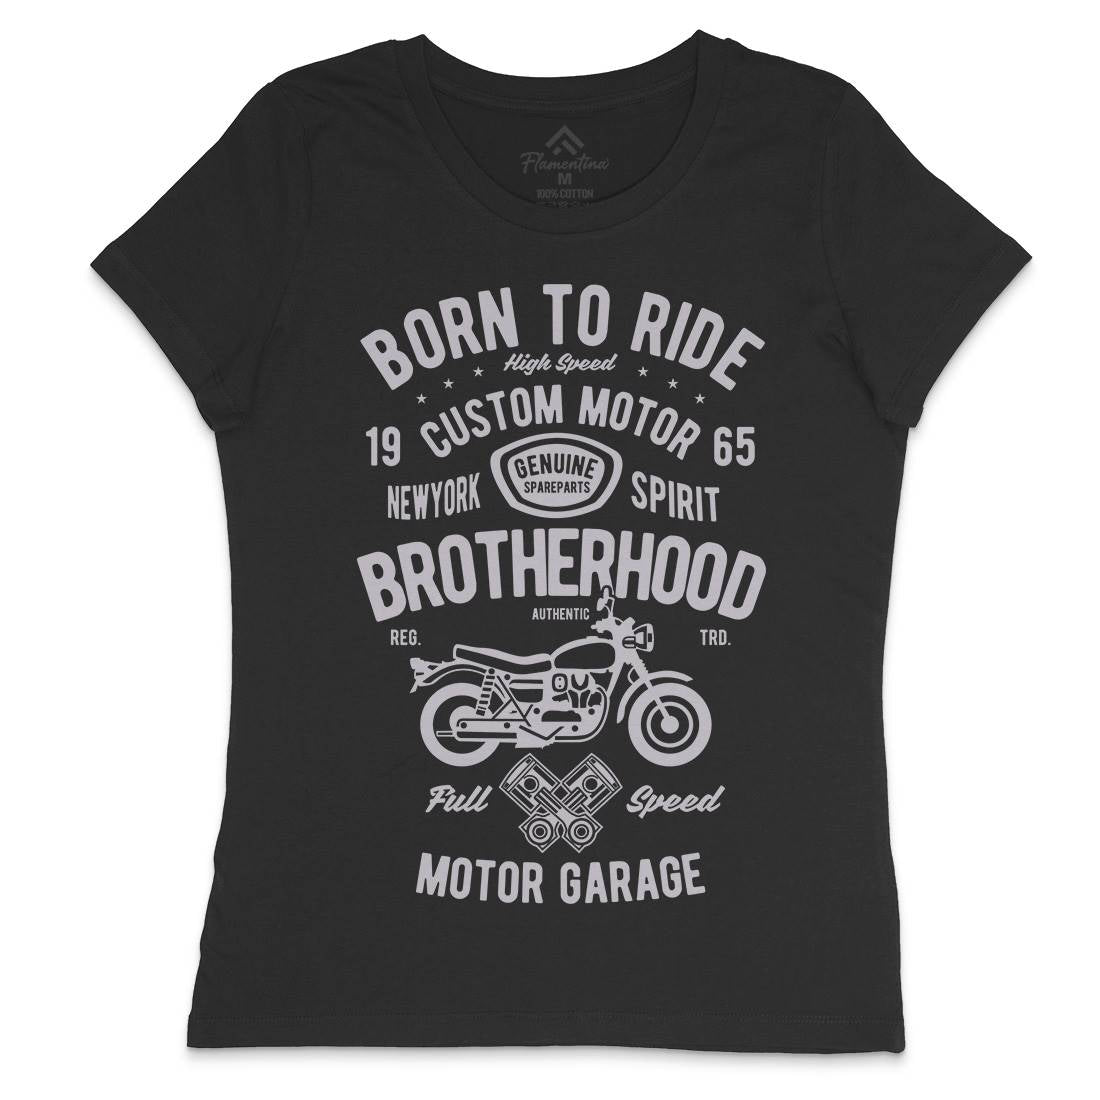 Brotherhood Womens Crew Neck T-Shirt Motorcycles B423